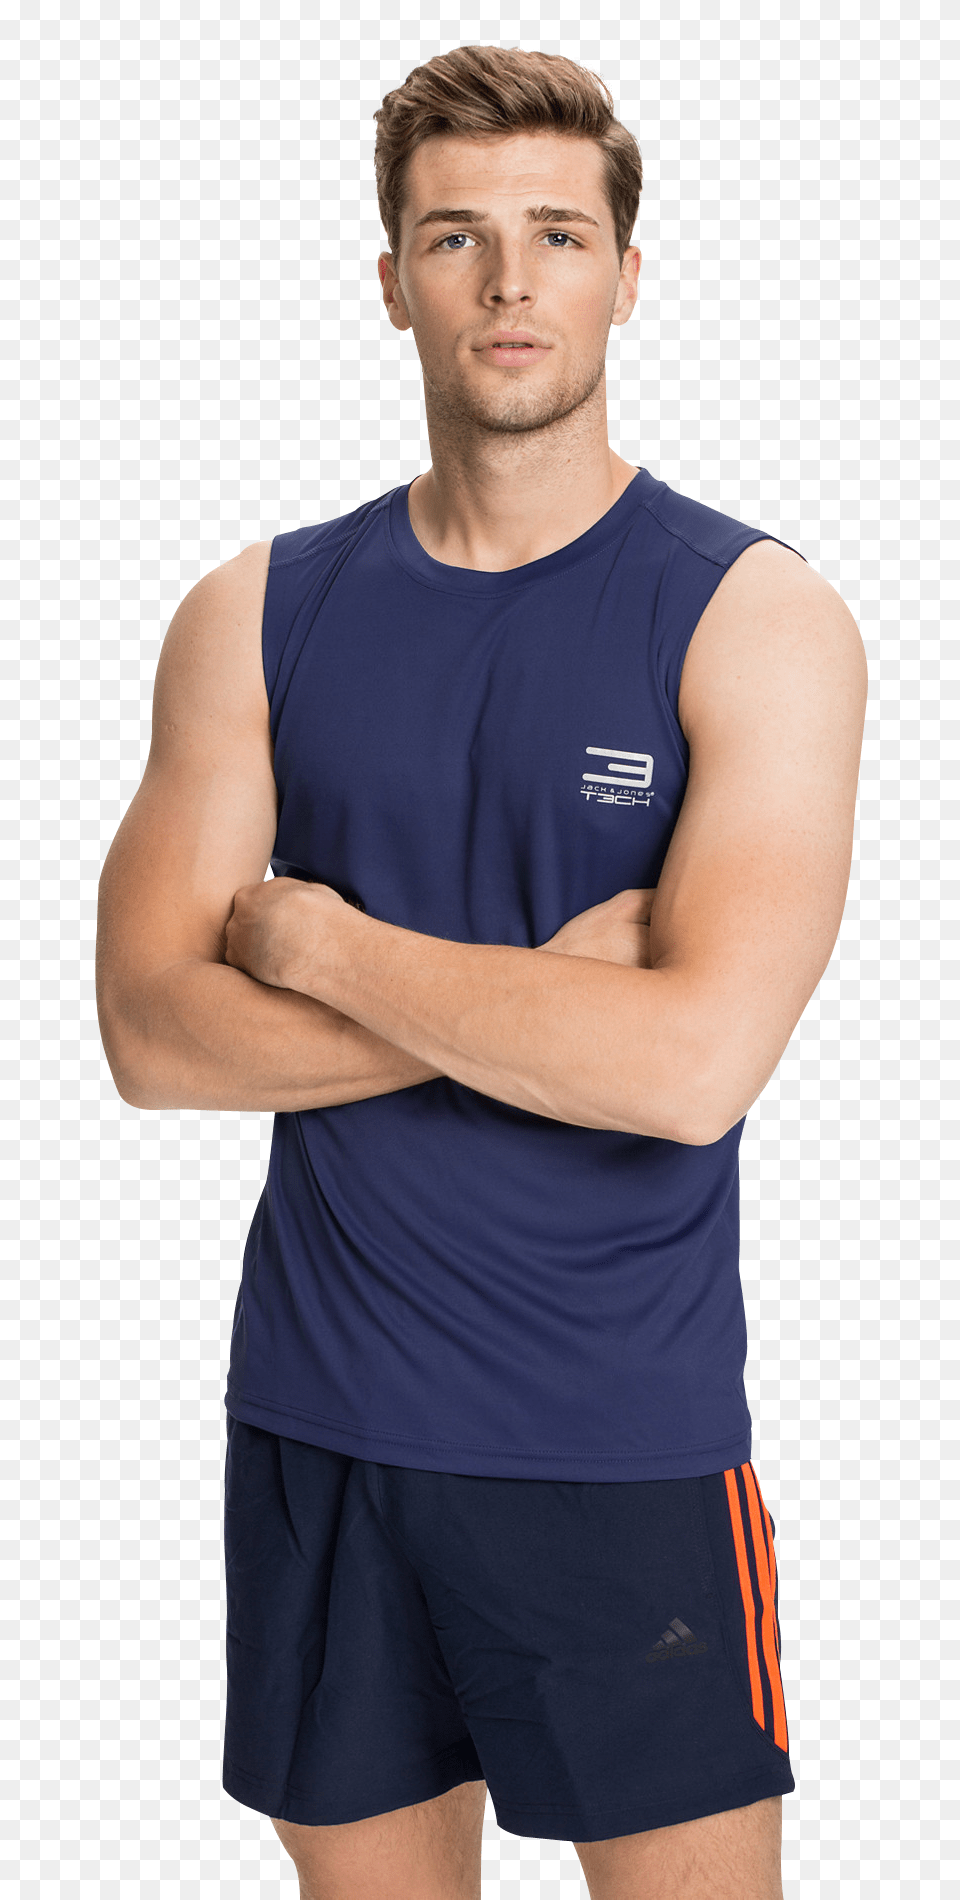 Pngpix Com Men Fitness Image, Clothing, Shorts, Adult, Male Png